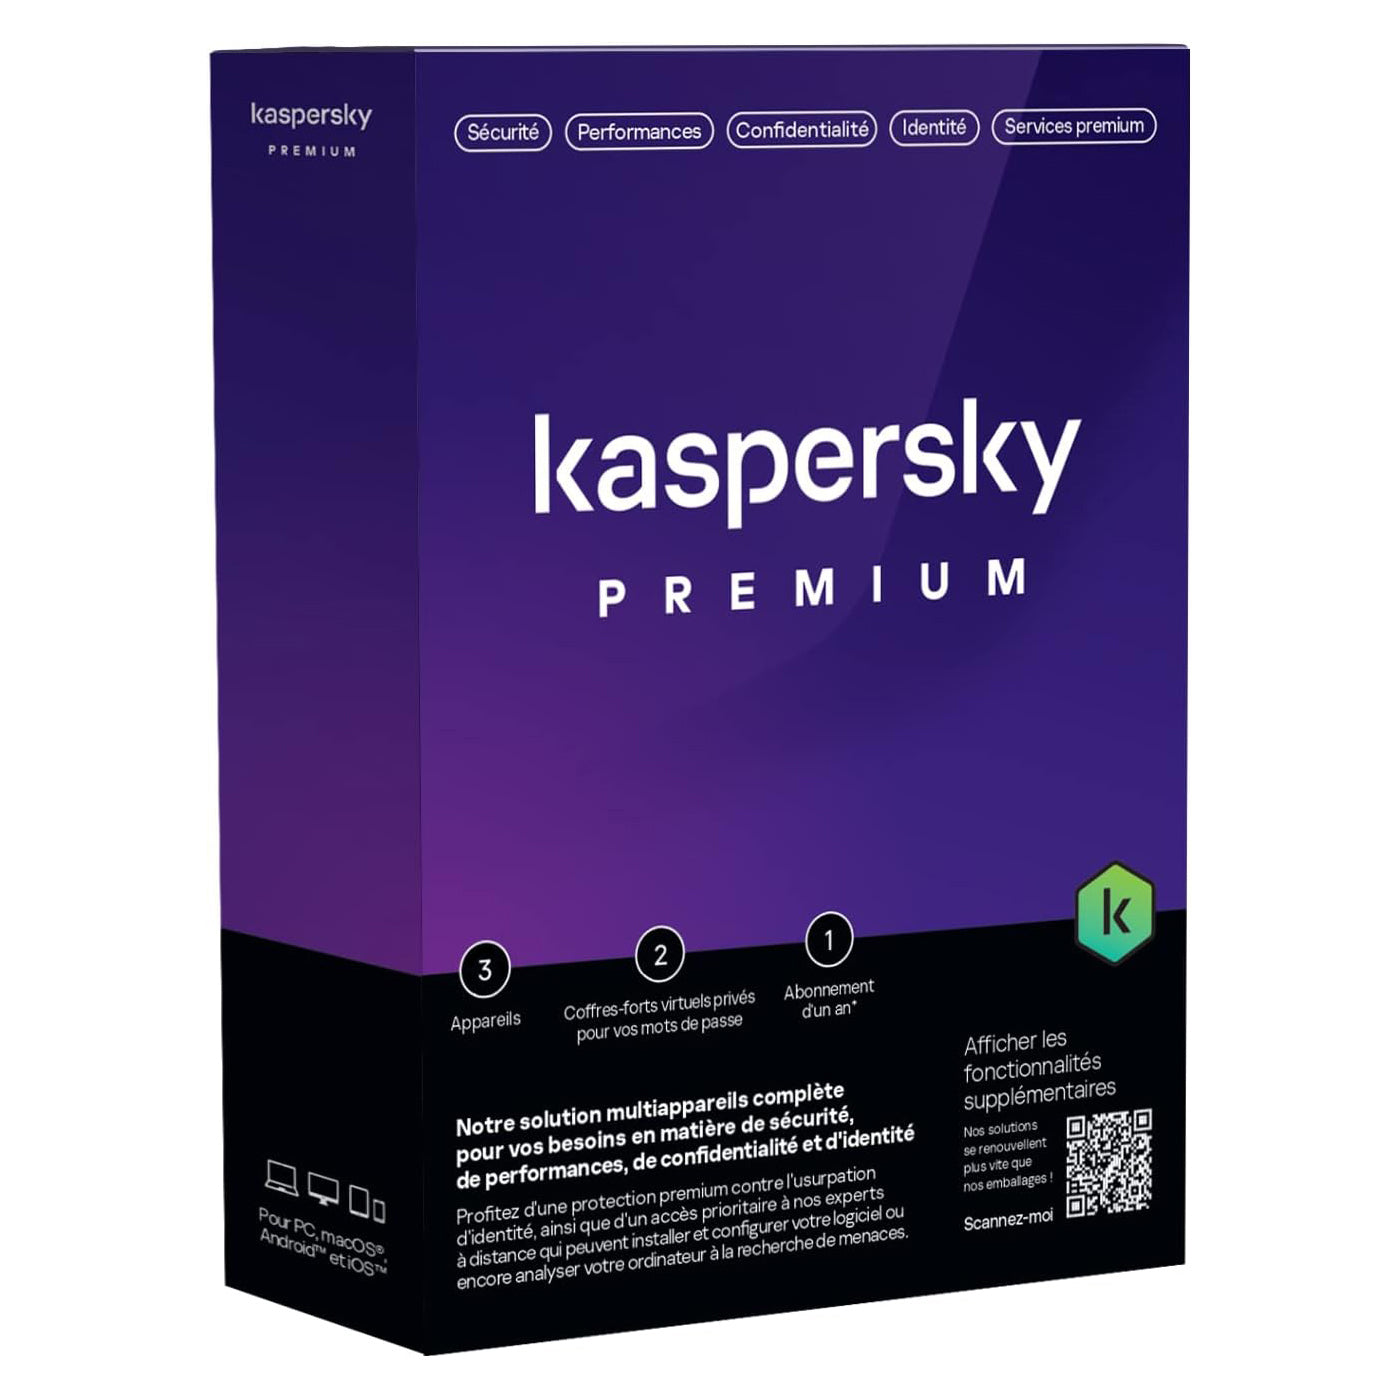 Kaspersky antivirus - Premium - License 3 Appareils / 1 an